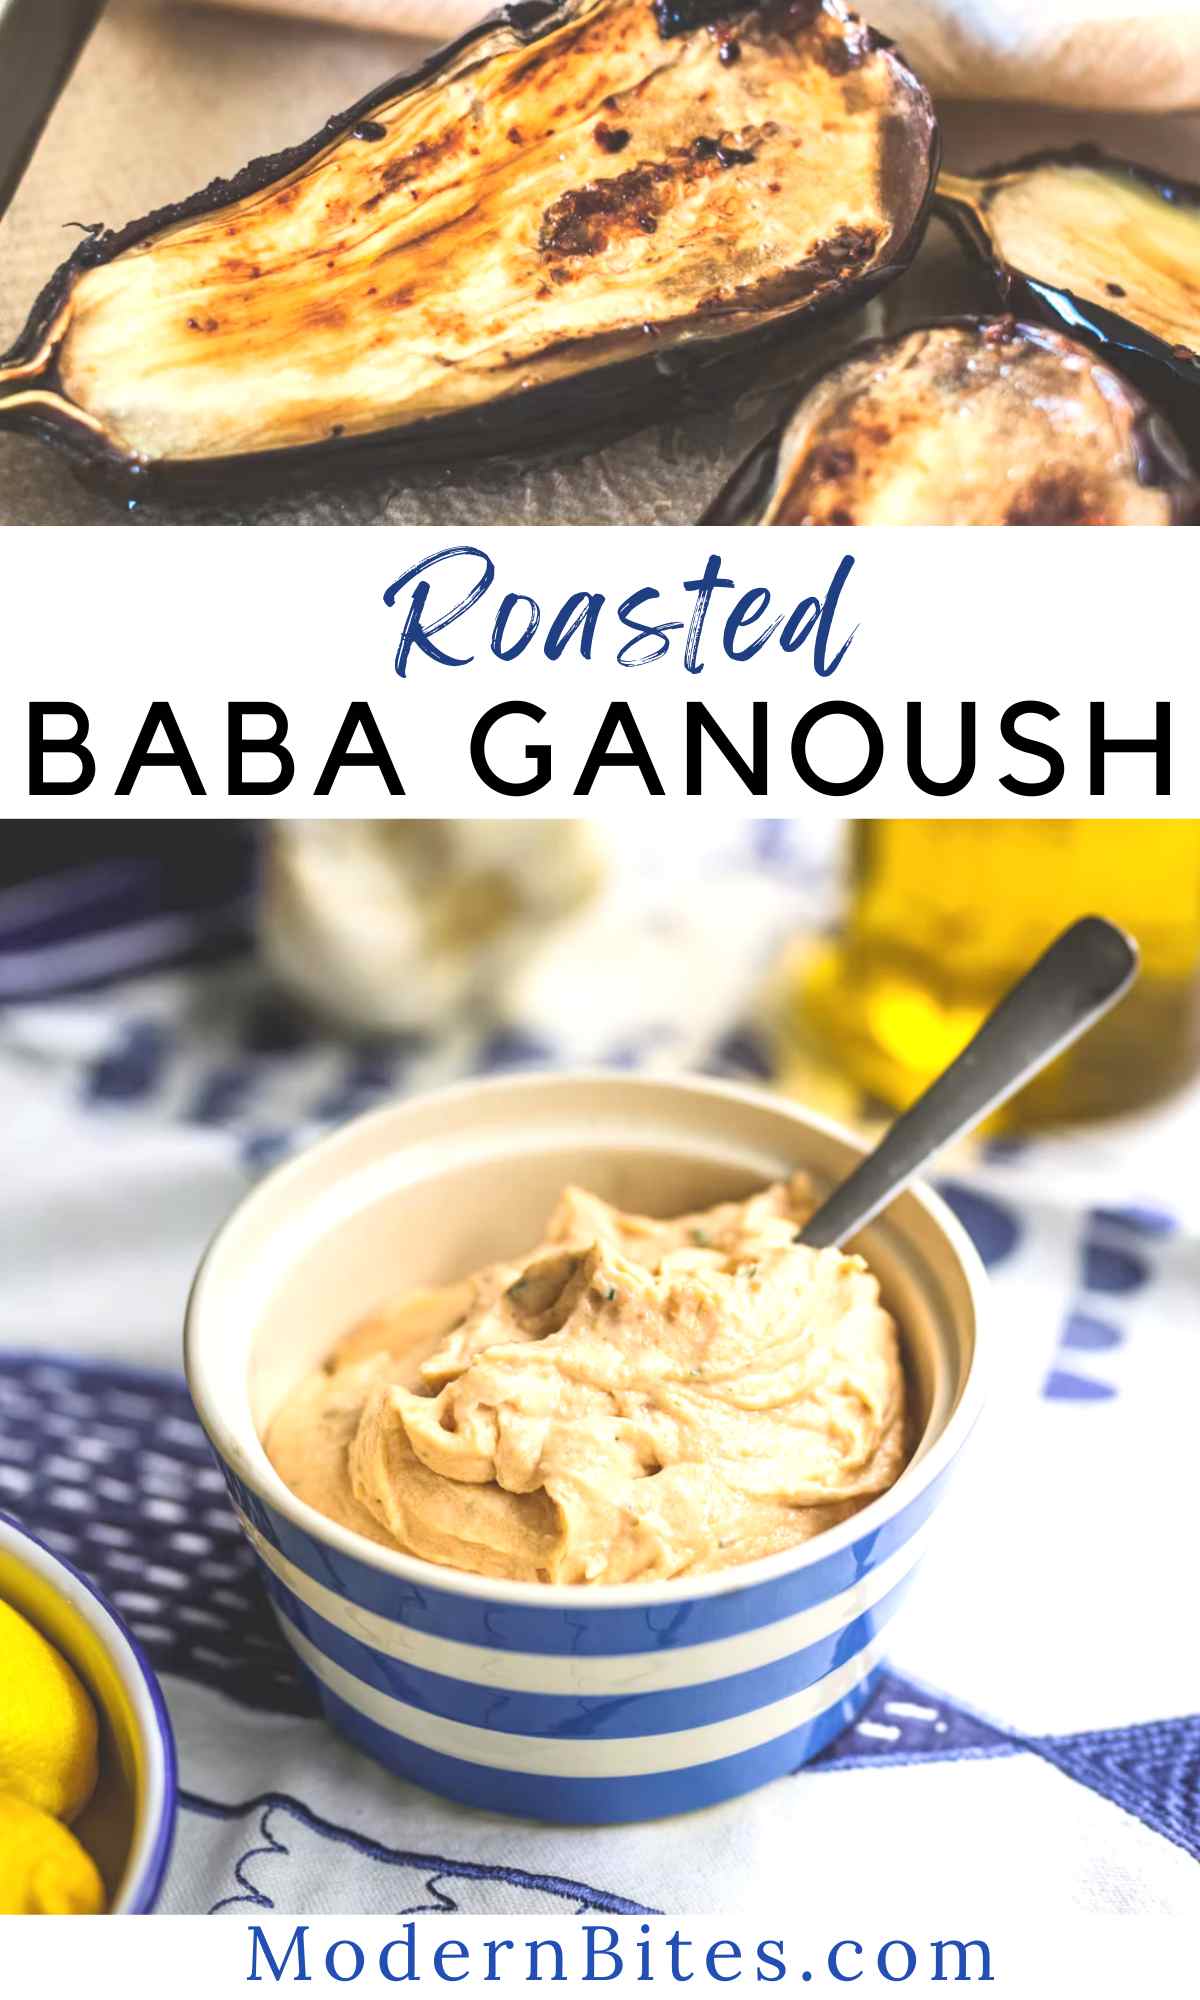 baba ganoush with roasted eggplant recipe easy homemade dip